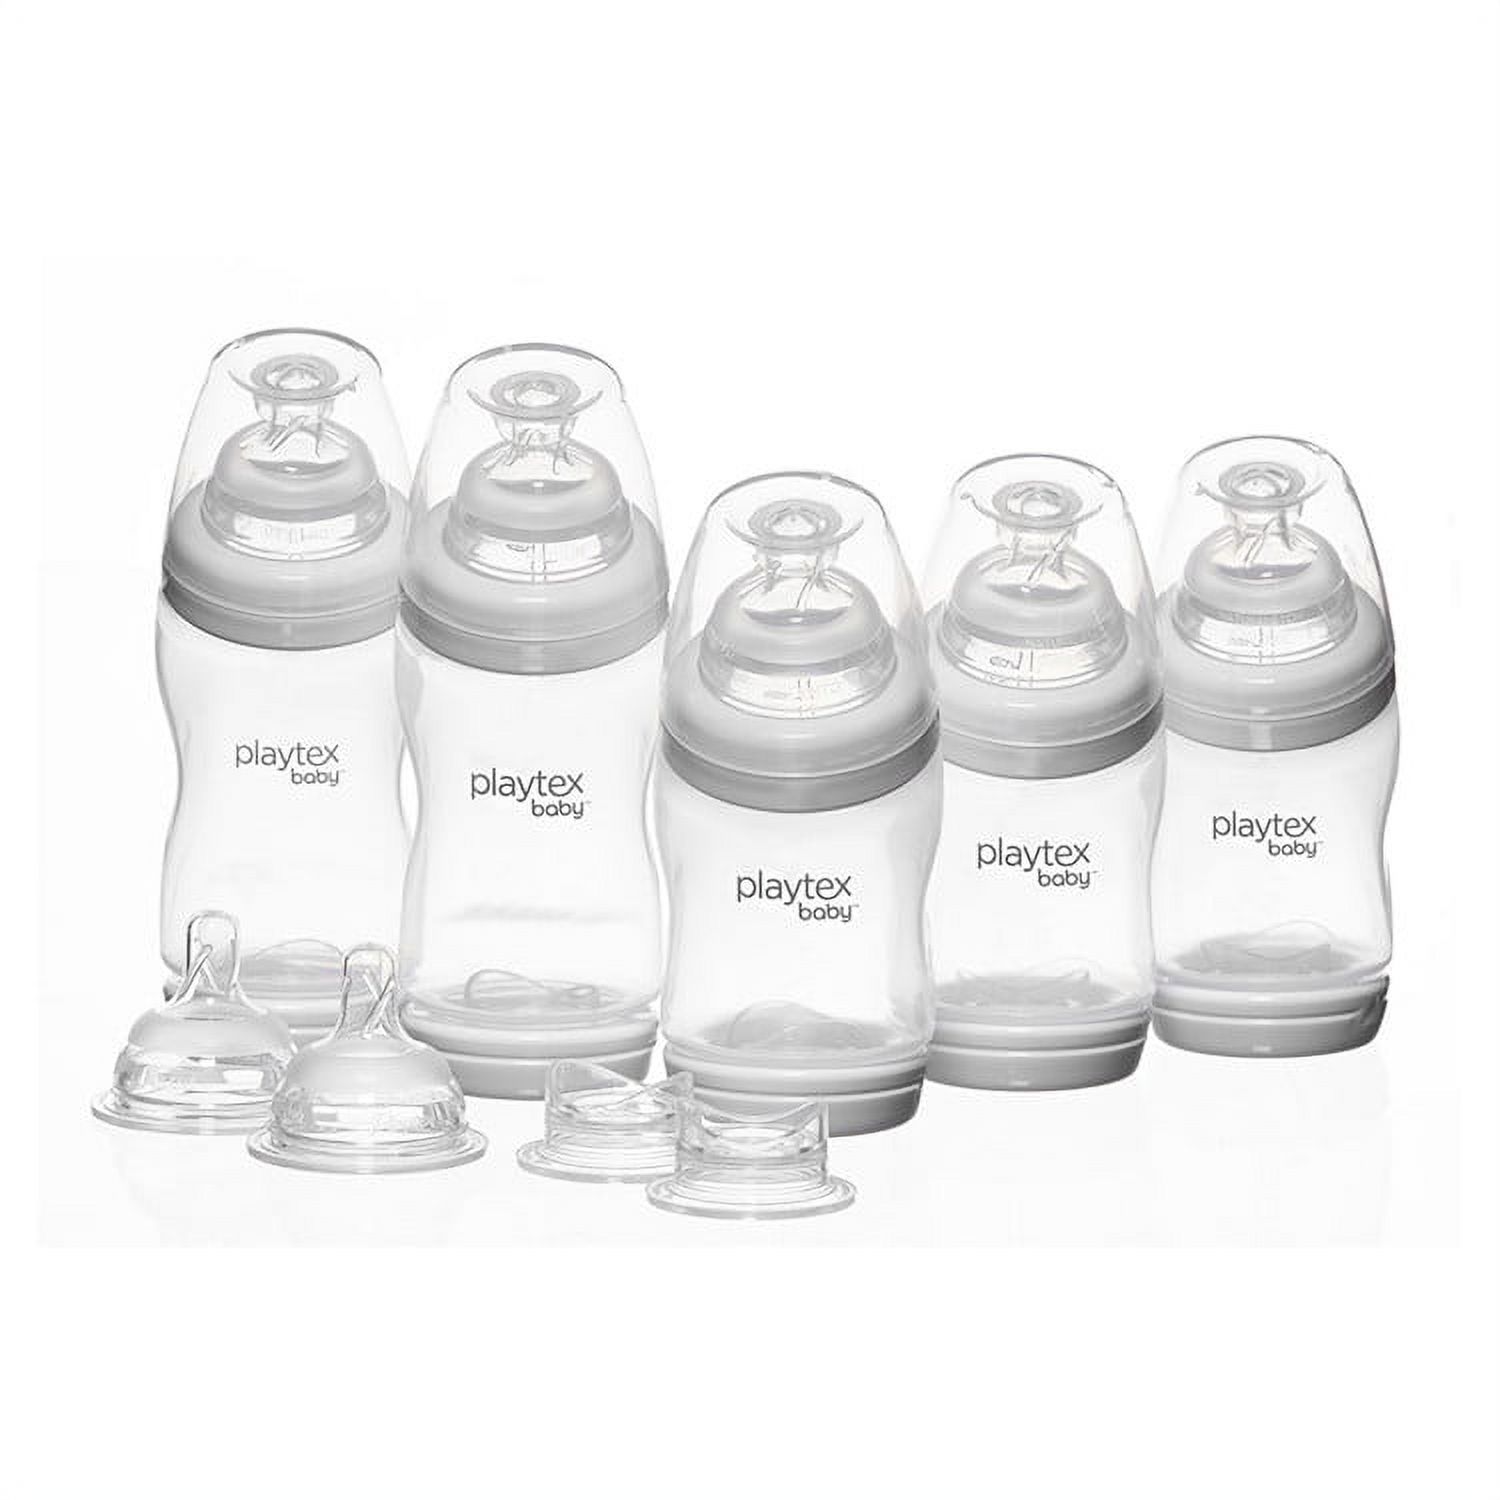 Playtex Baby VentAire Anti-colic Baby Bottle Newborn Gift Set - image 1 of 16